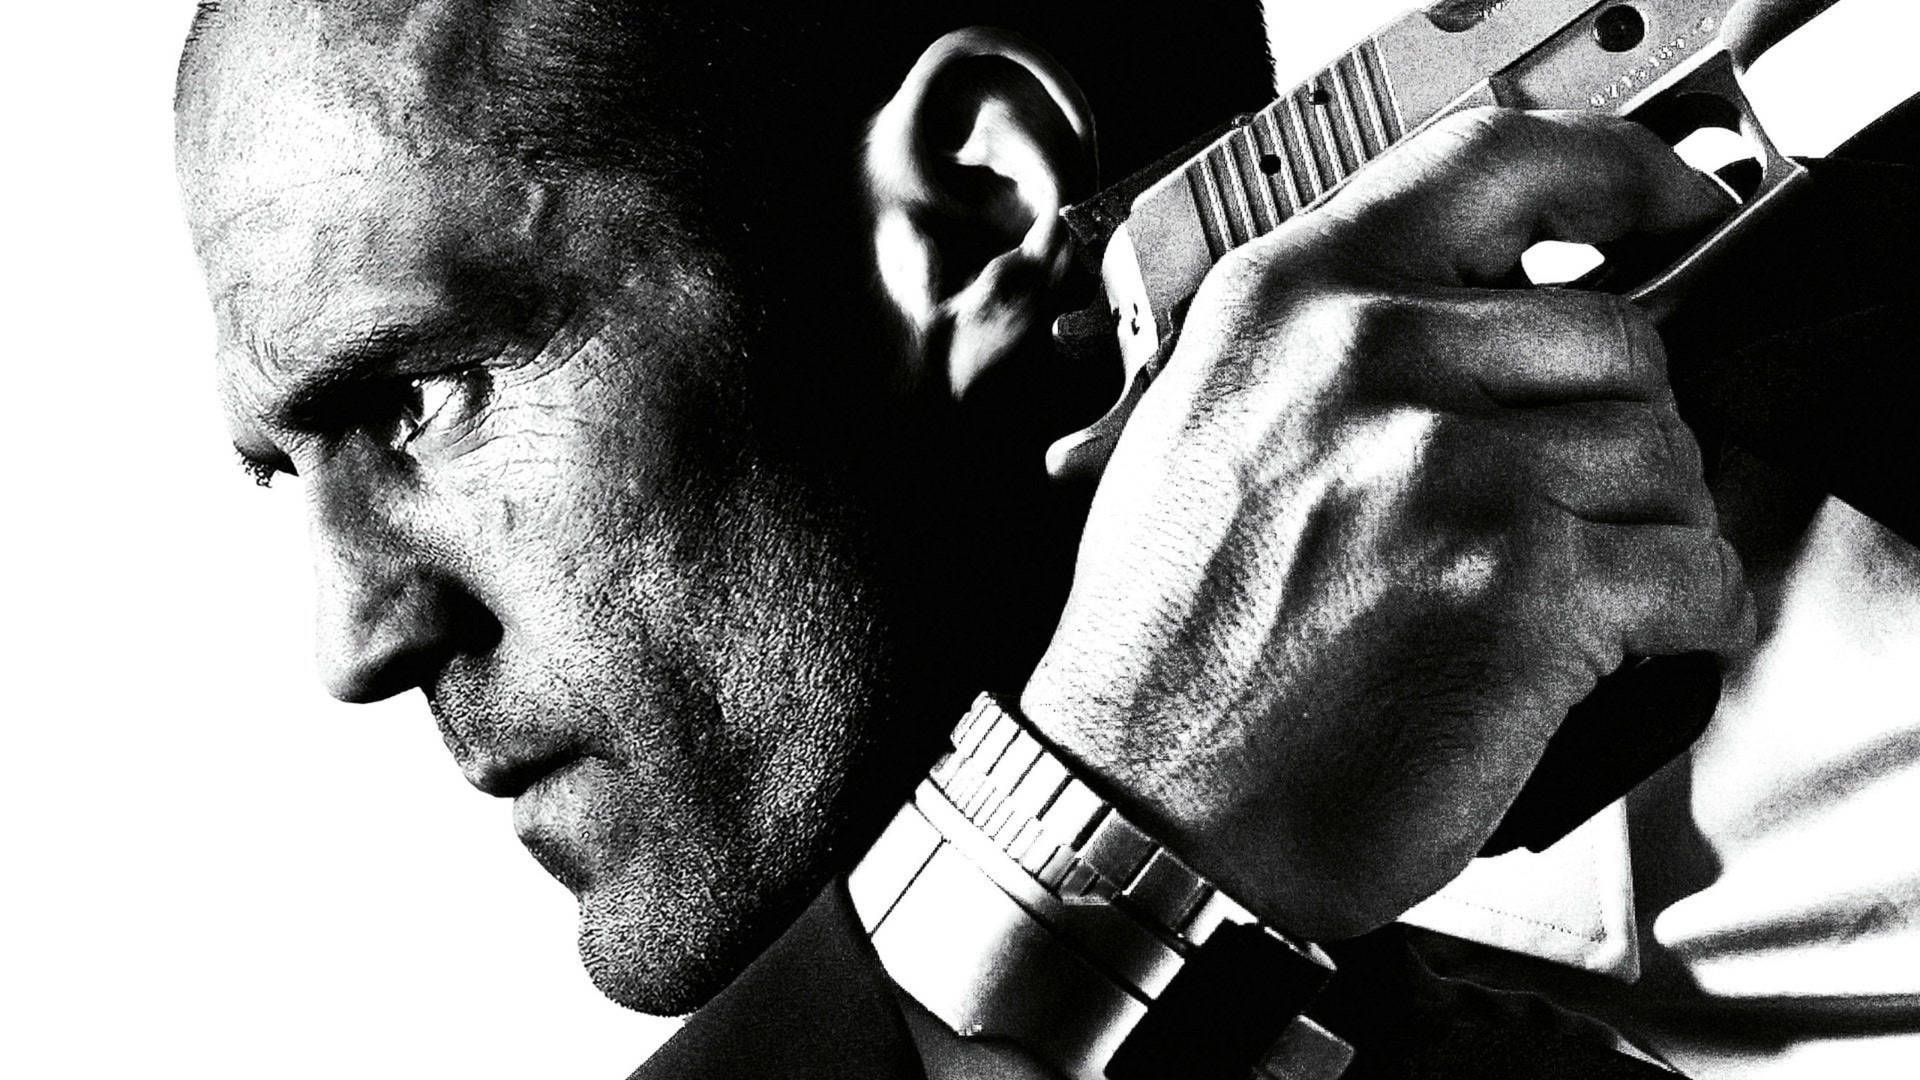 Jason Statham With Gun Monochrome